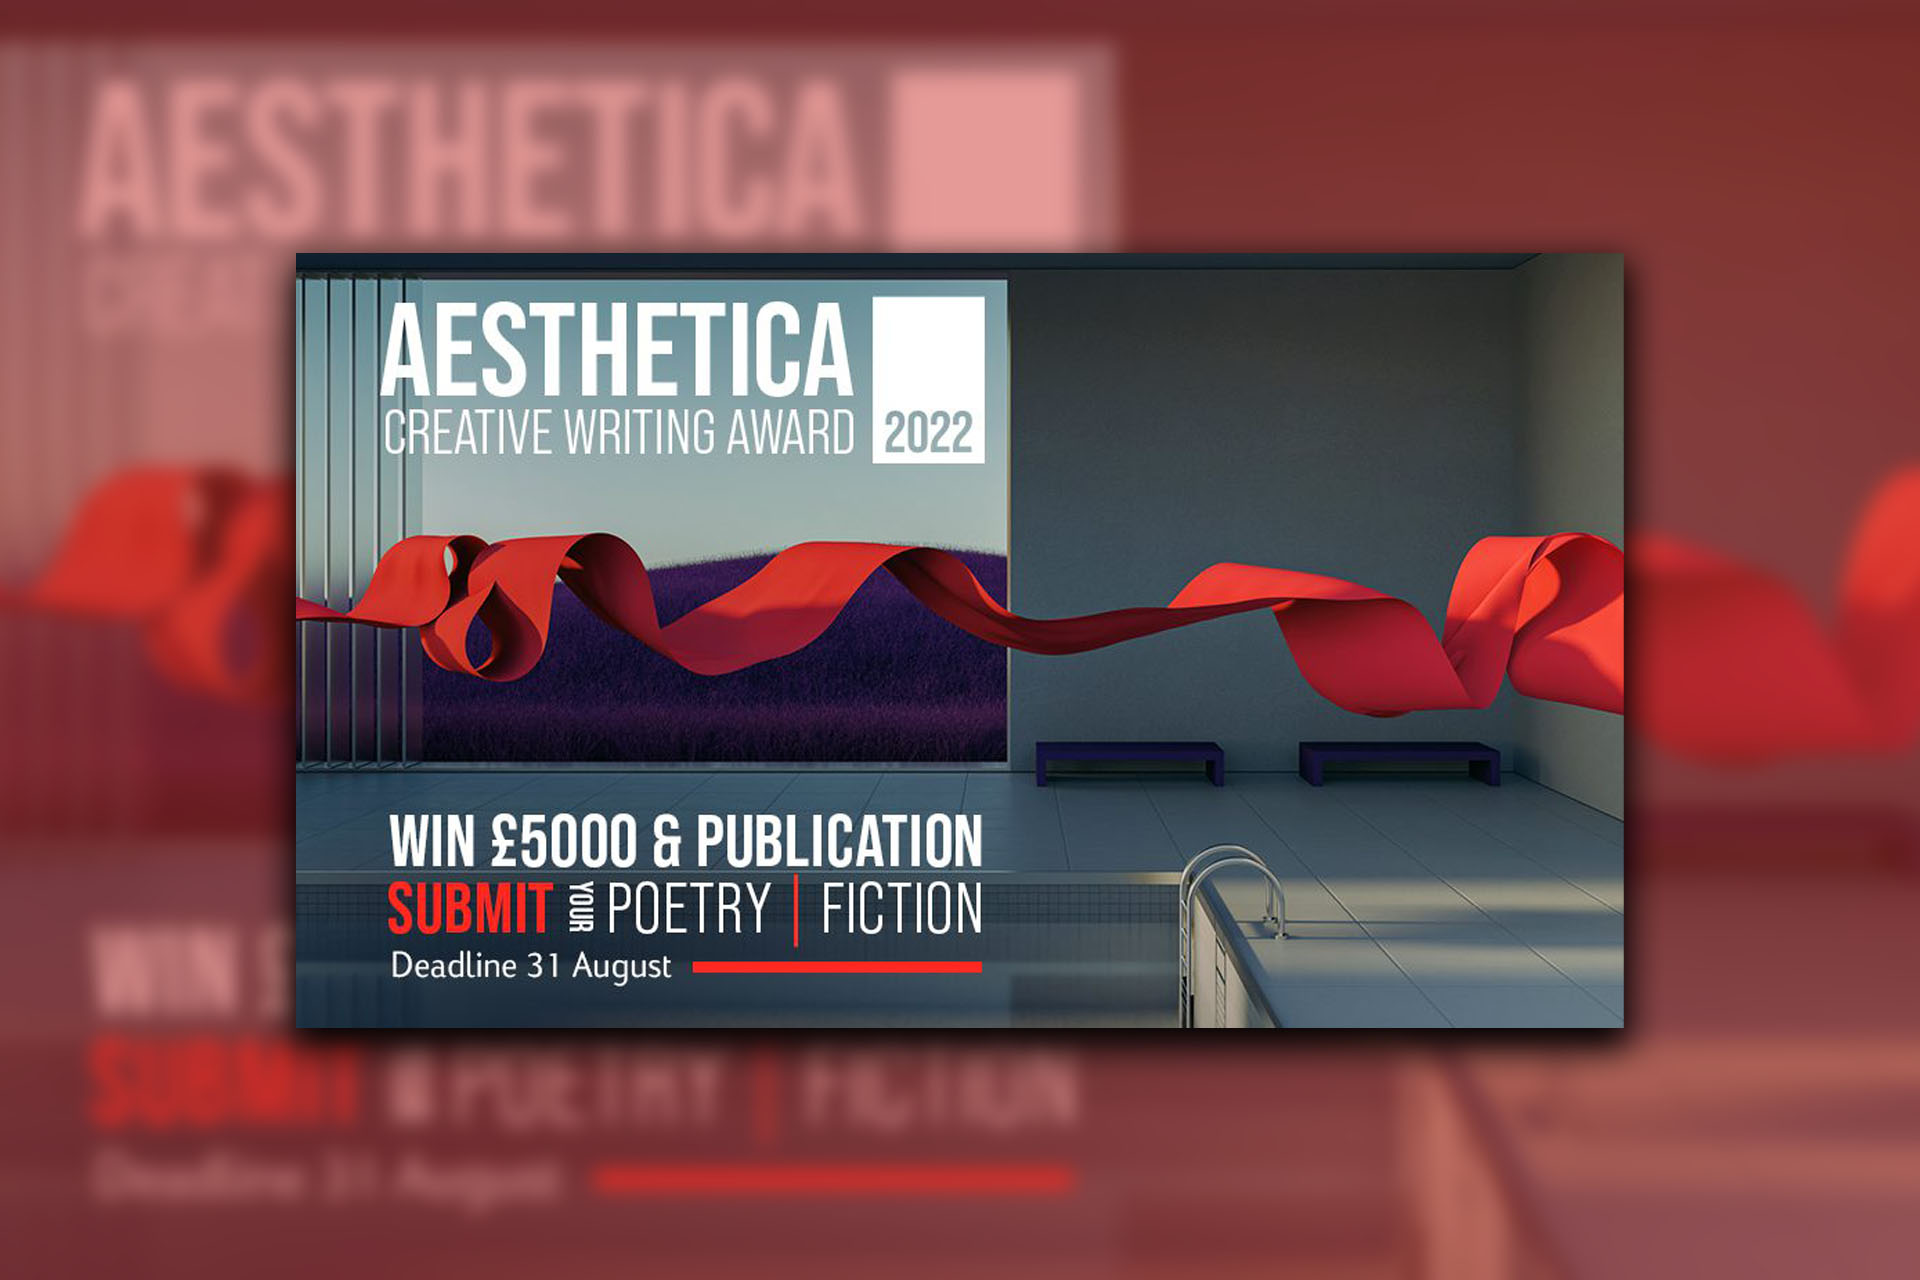 Aesthetica Creative Writing Award 2022